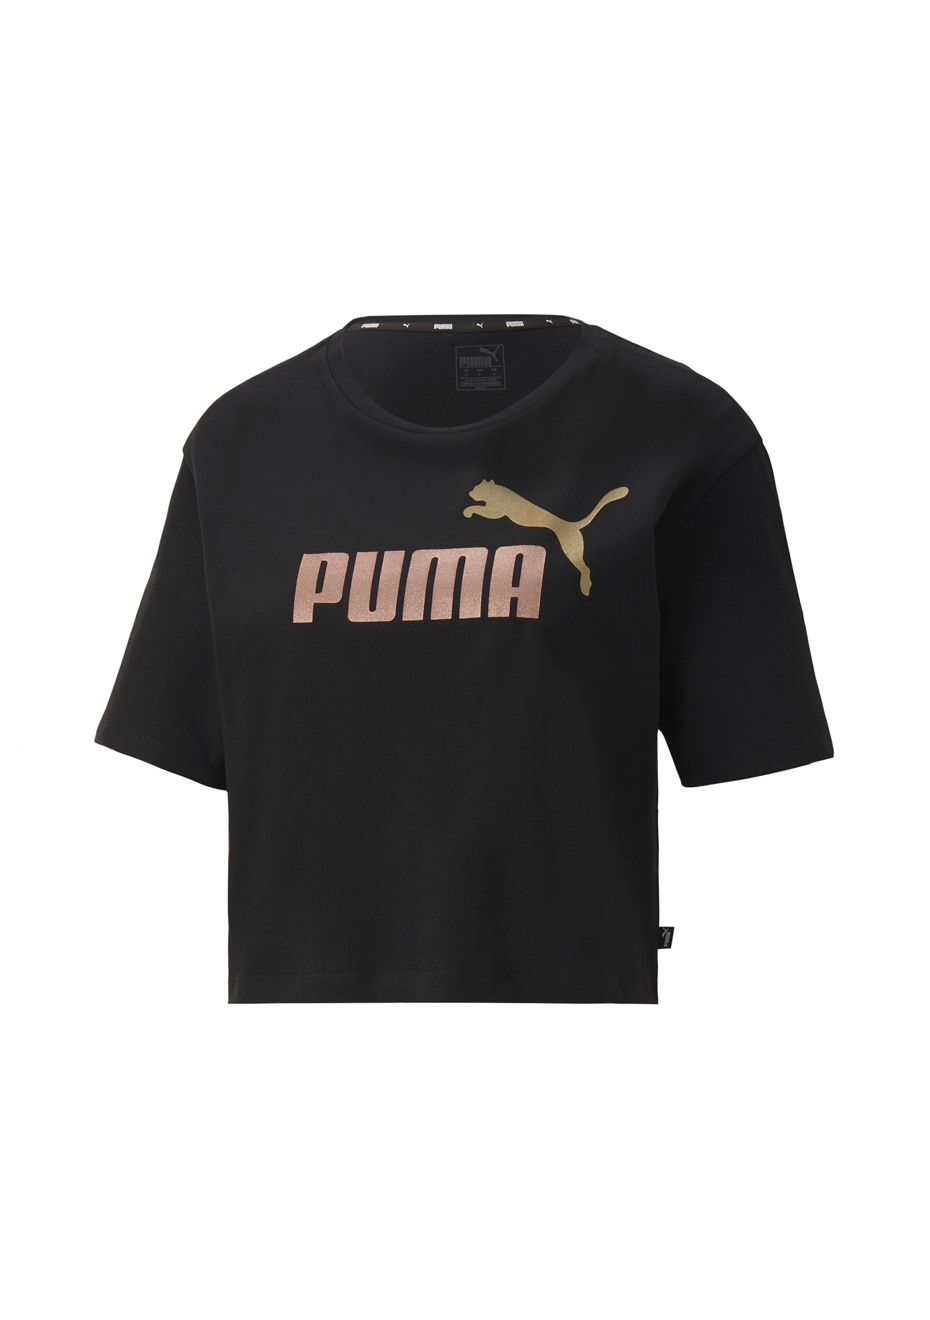 rose gold puma shirt